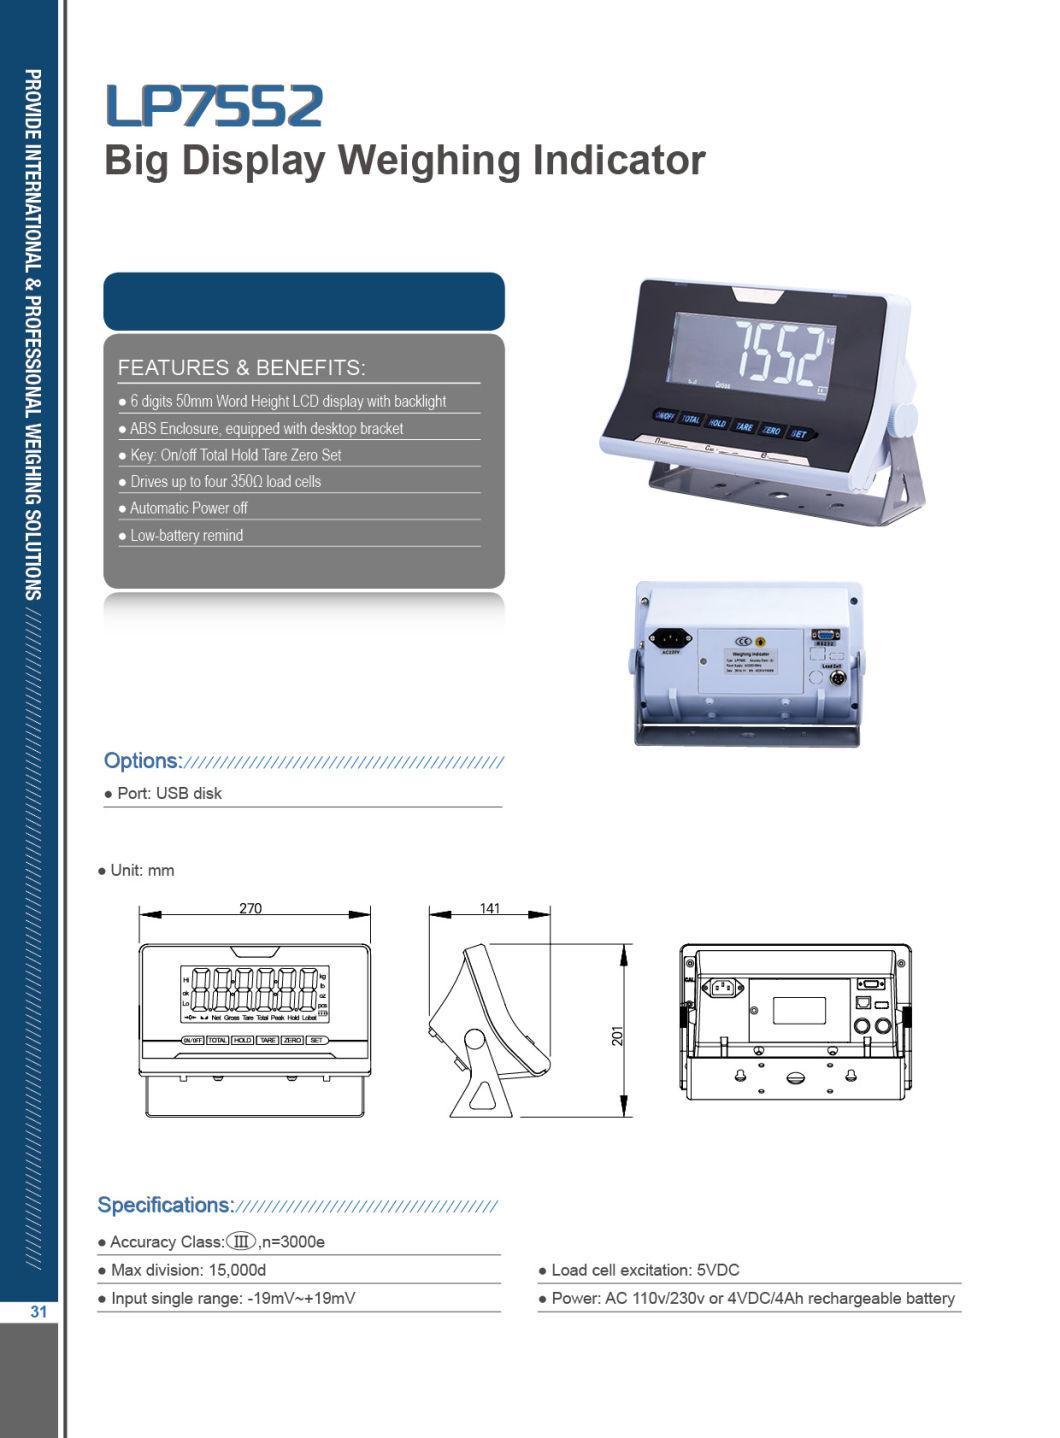 China Professional Manufacture Electronic Digital Indicator, Weight Indicatorcustoms Data